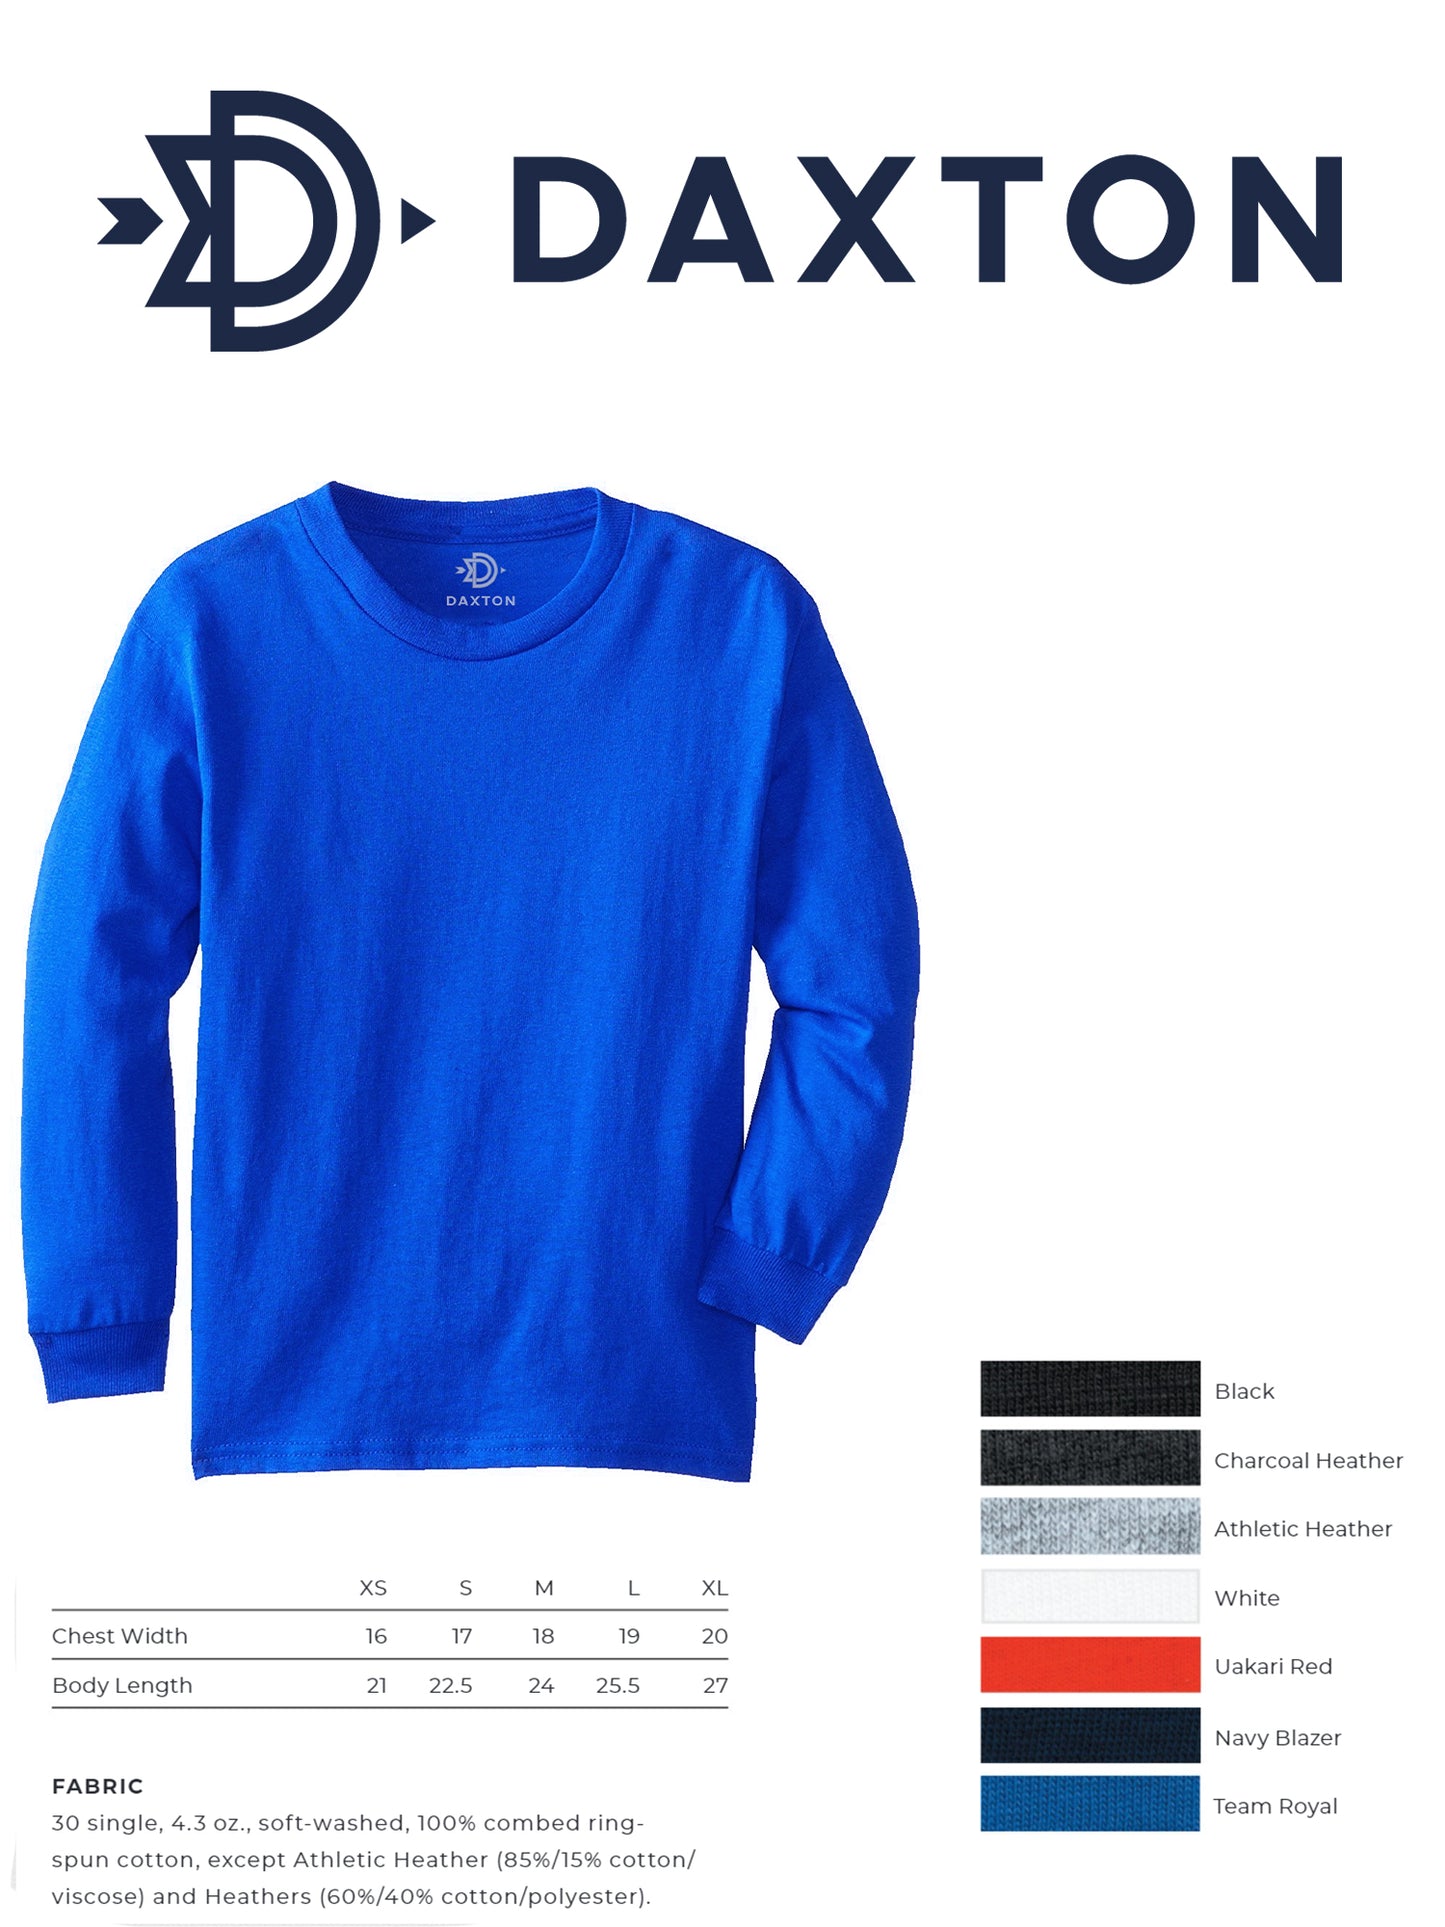 Daxton Youth Long Sleeve Cincinnati Basic Tshirt